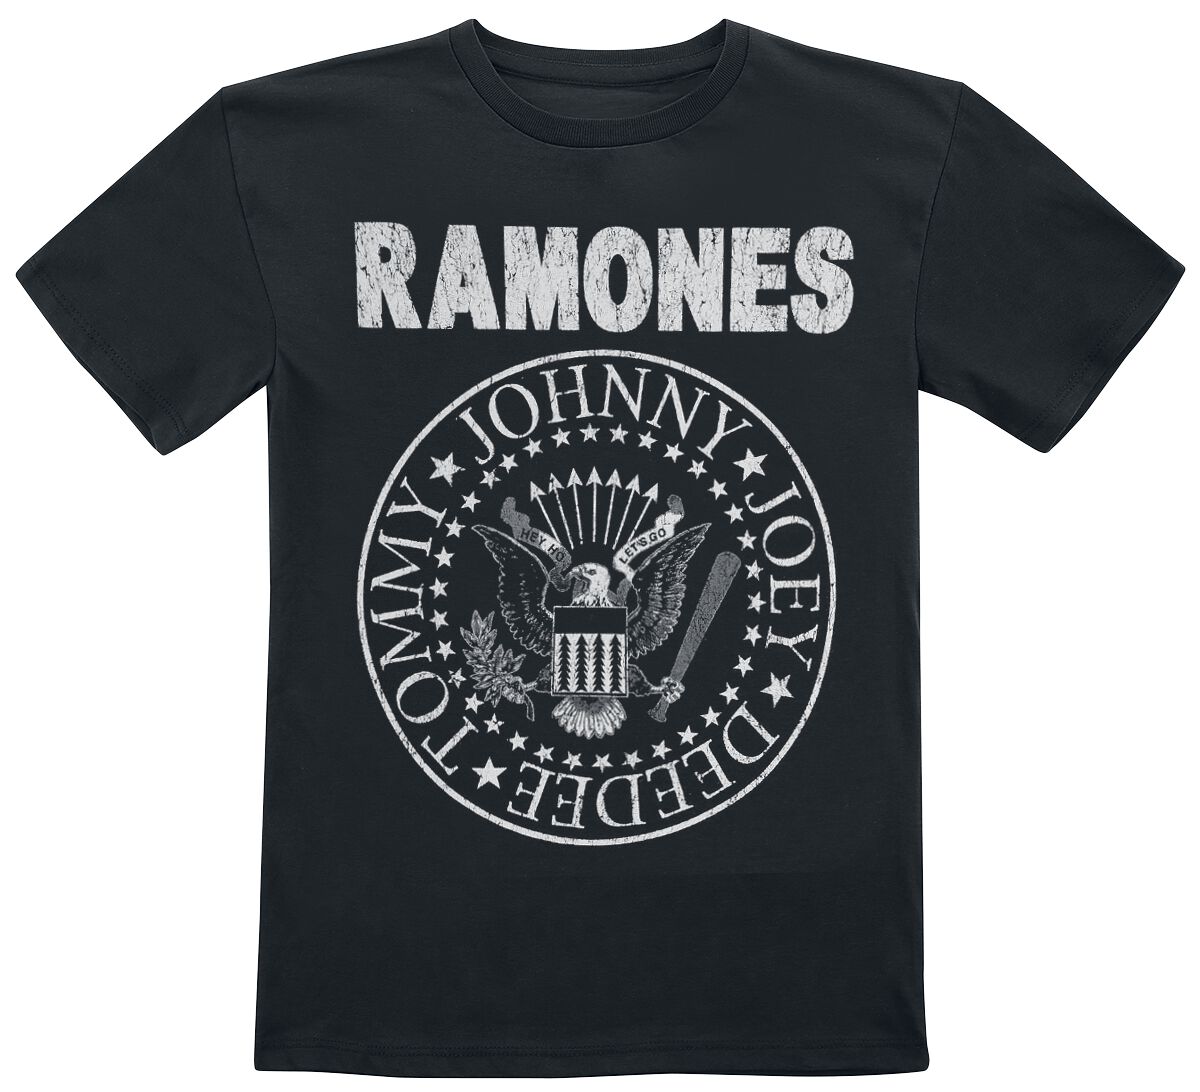 Ramones Kids - Seal Hey Ho Lets Go Backprint T-Shirt schwarz in 116